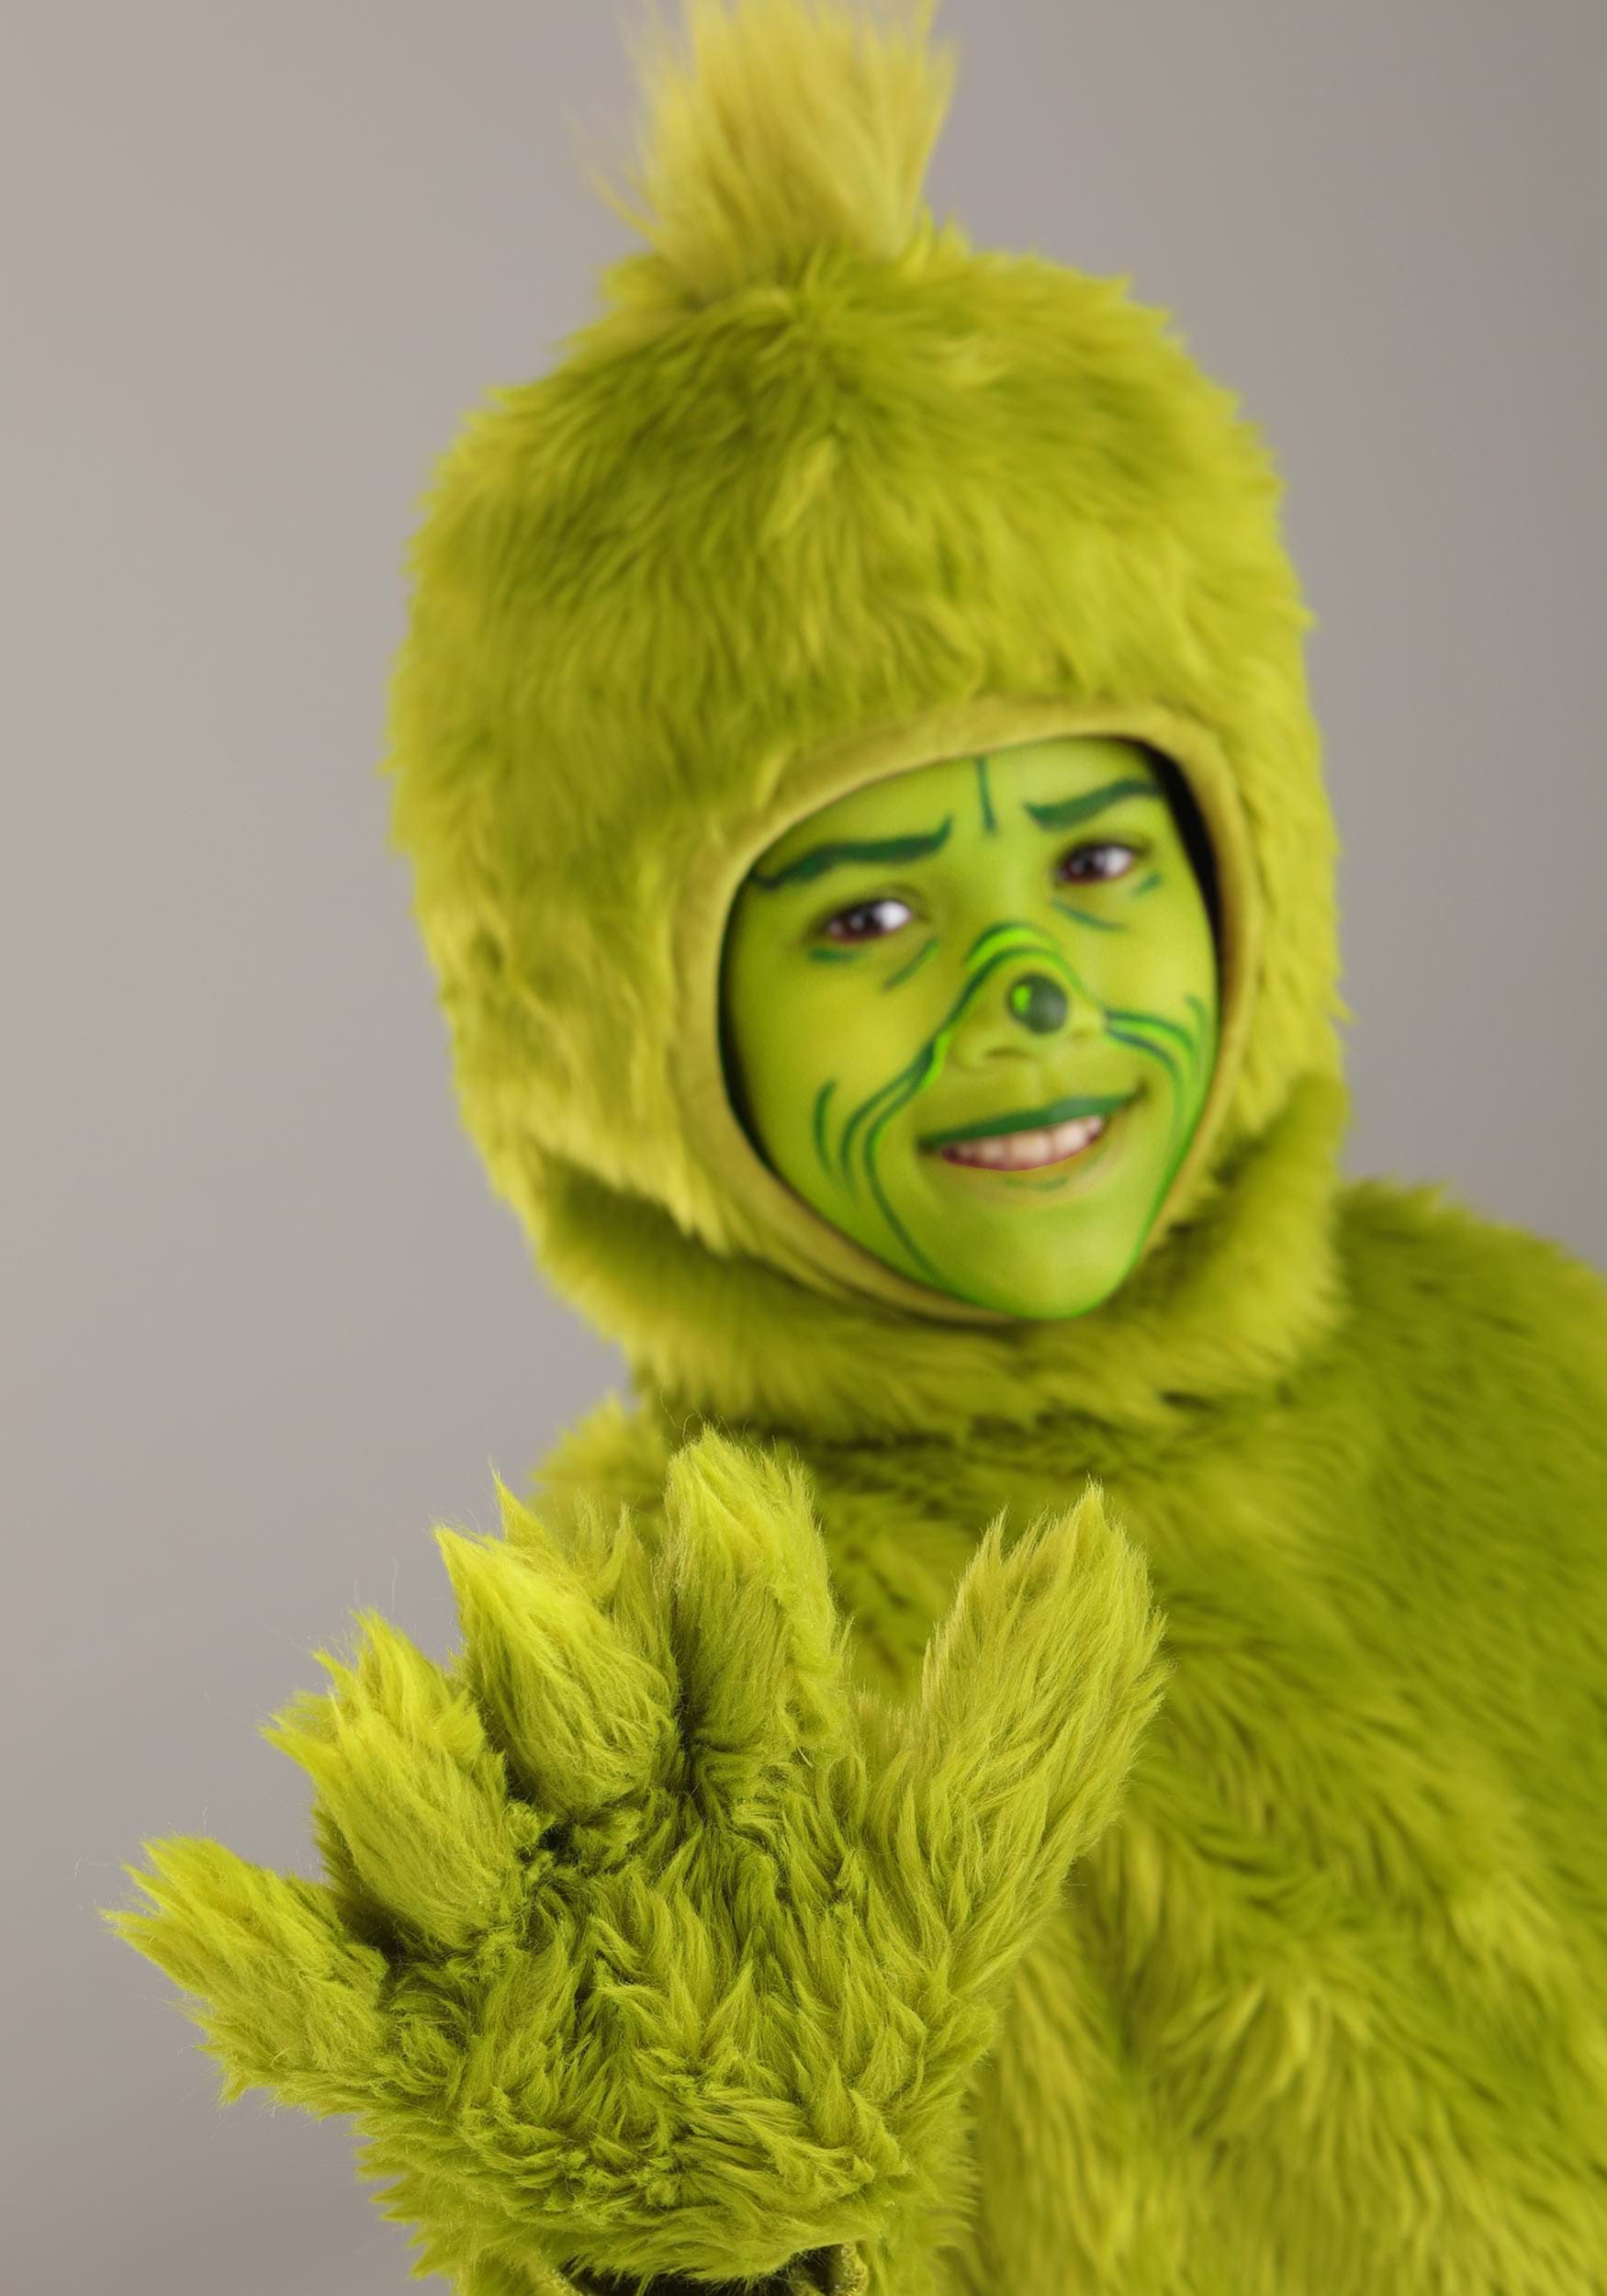 Adult Dr. Seuss Open Face Grinch Costume